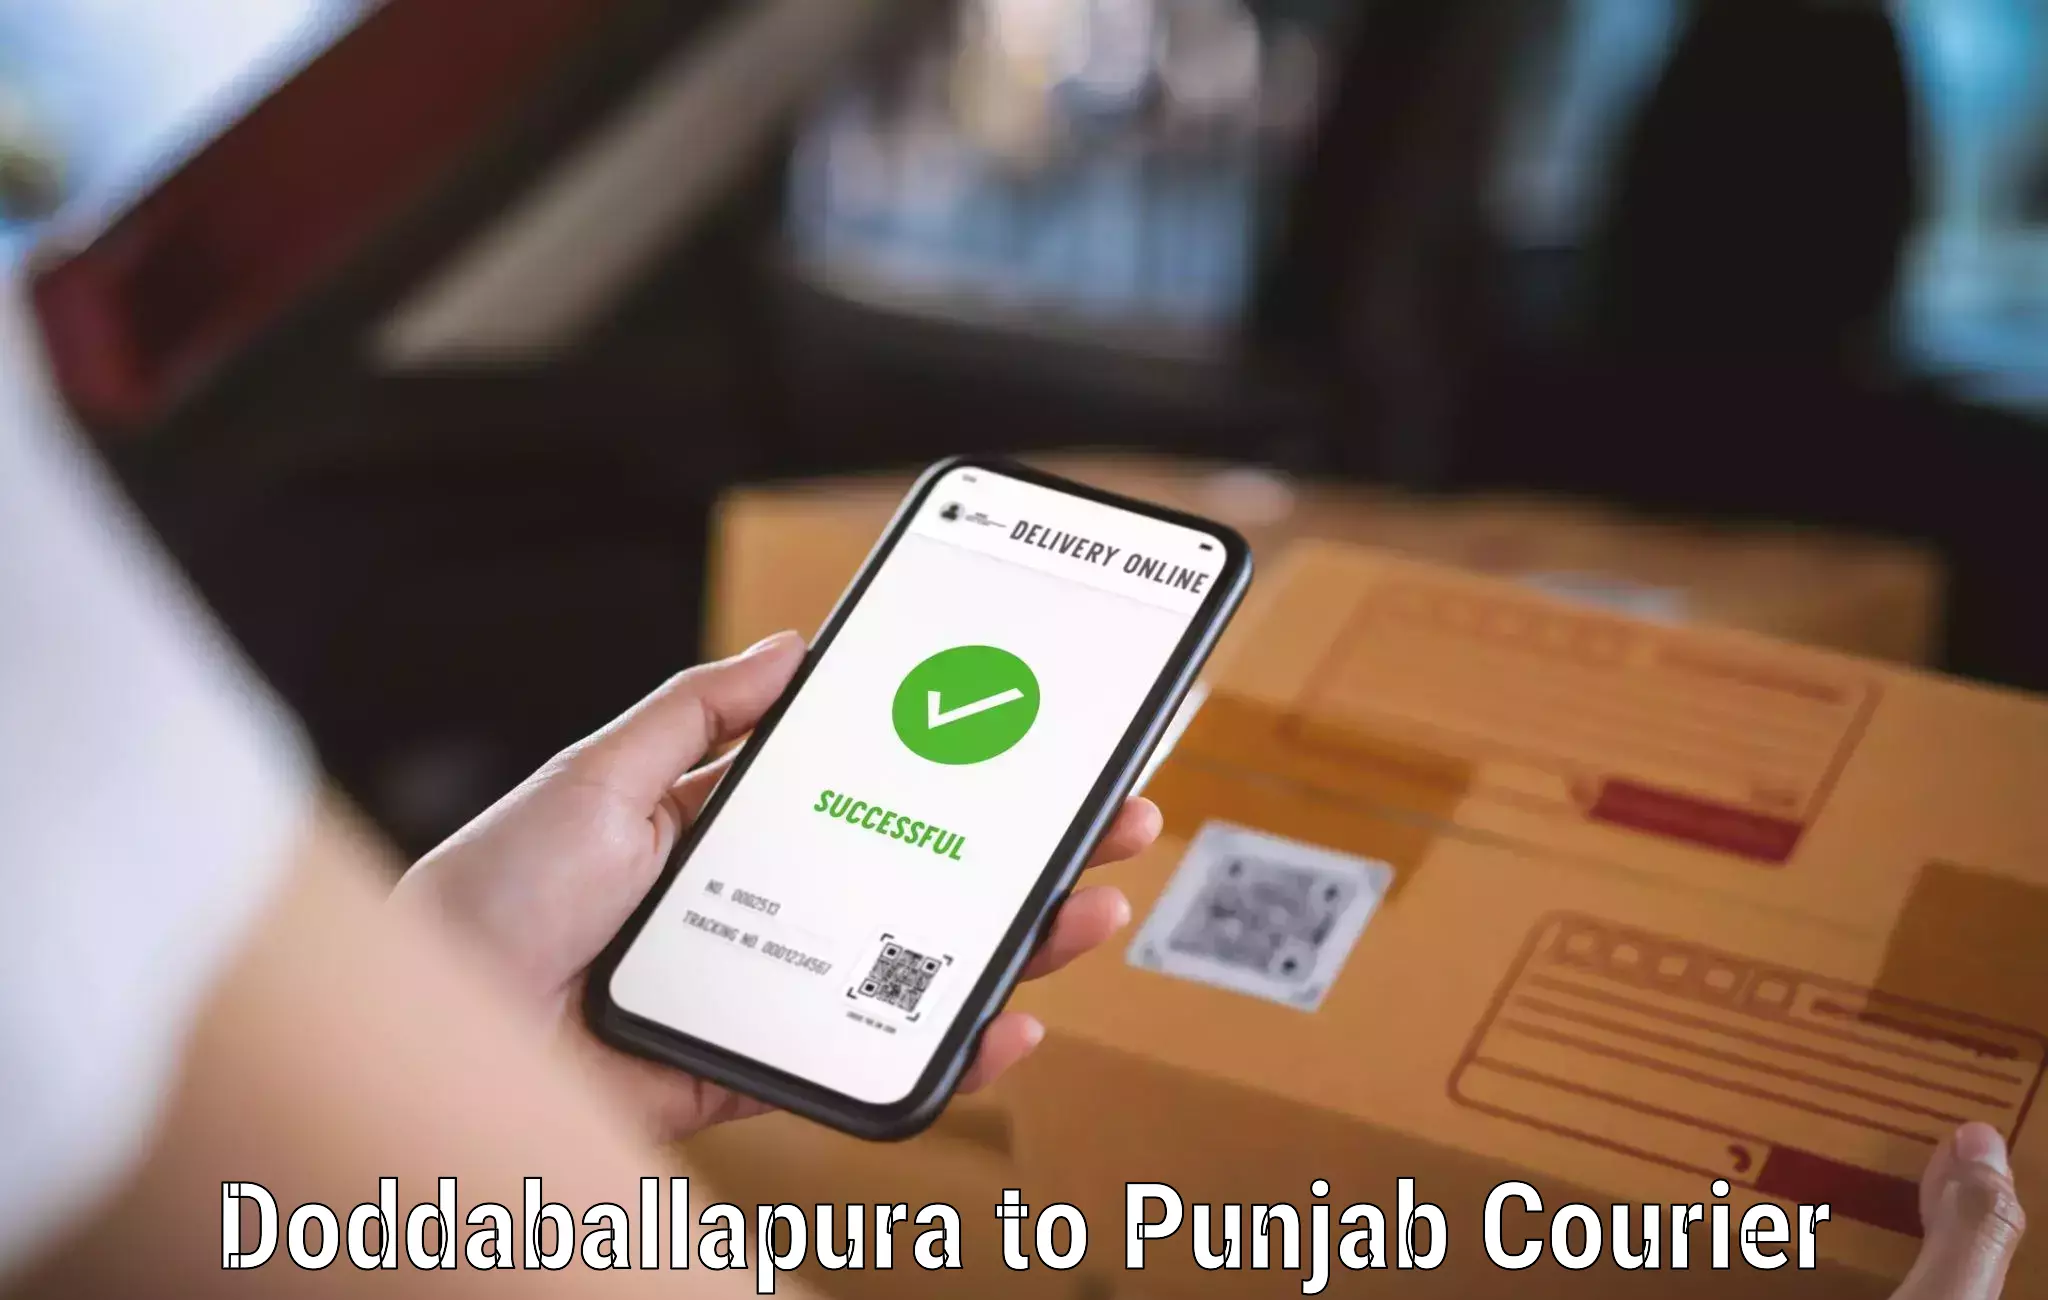 User-friendly delivery service in Doddaballapura to Malout